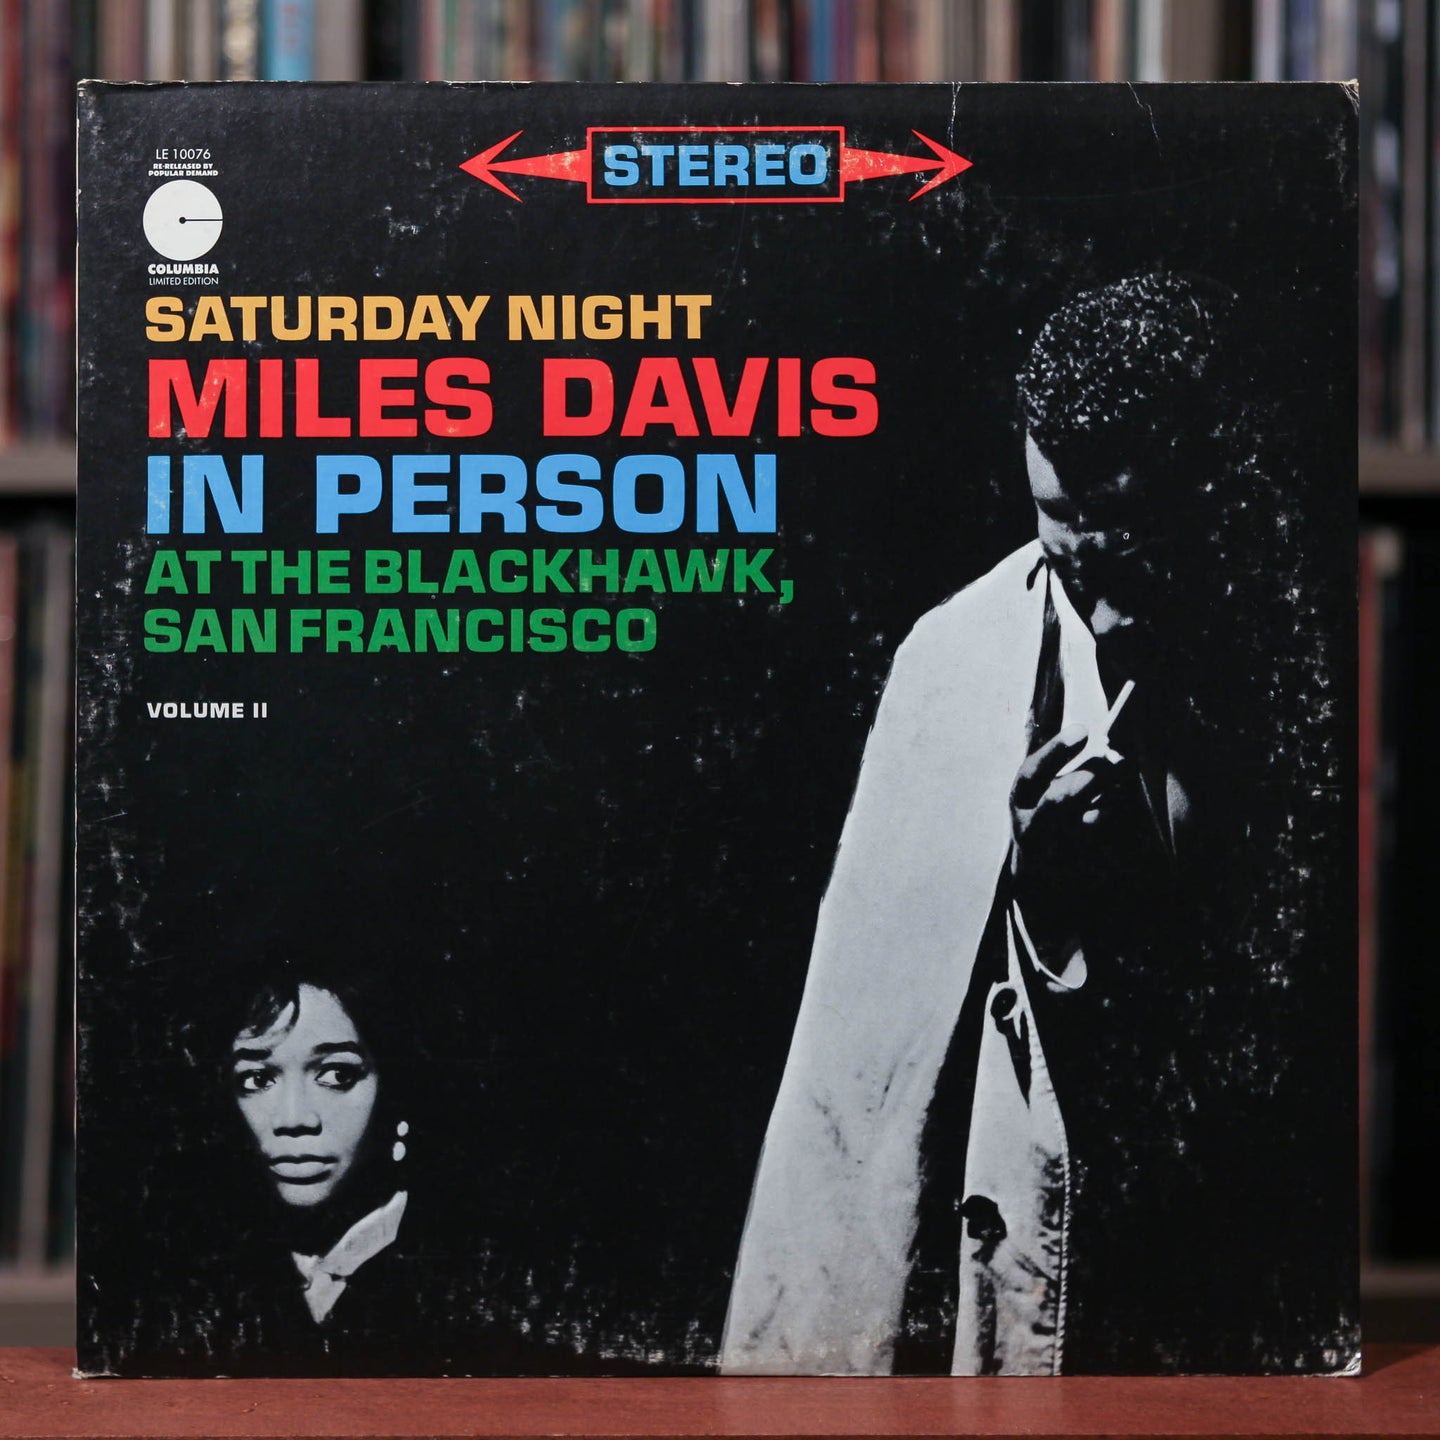 Miles Davis - In Person Saturday Night At The Blackhawk, San Francisco Vol II - 1973 Columbia, VG/VG++